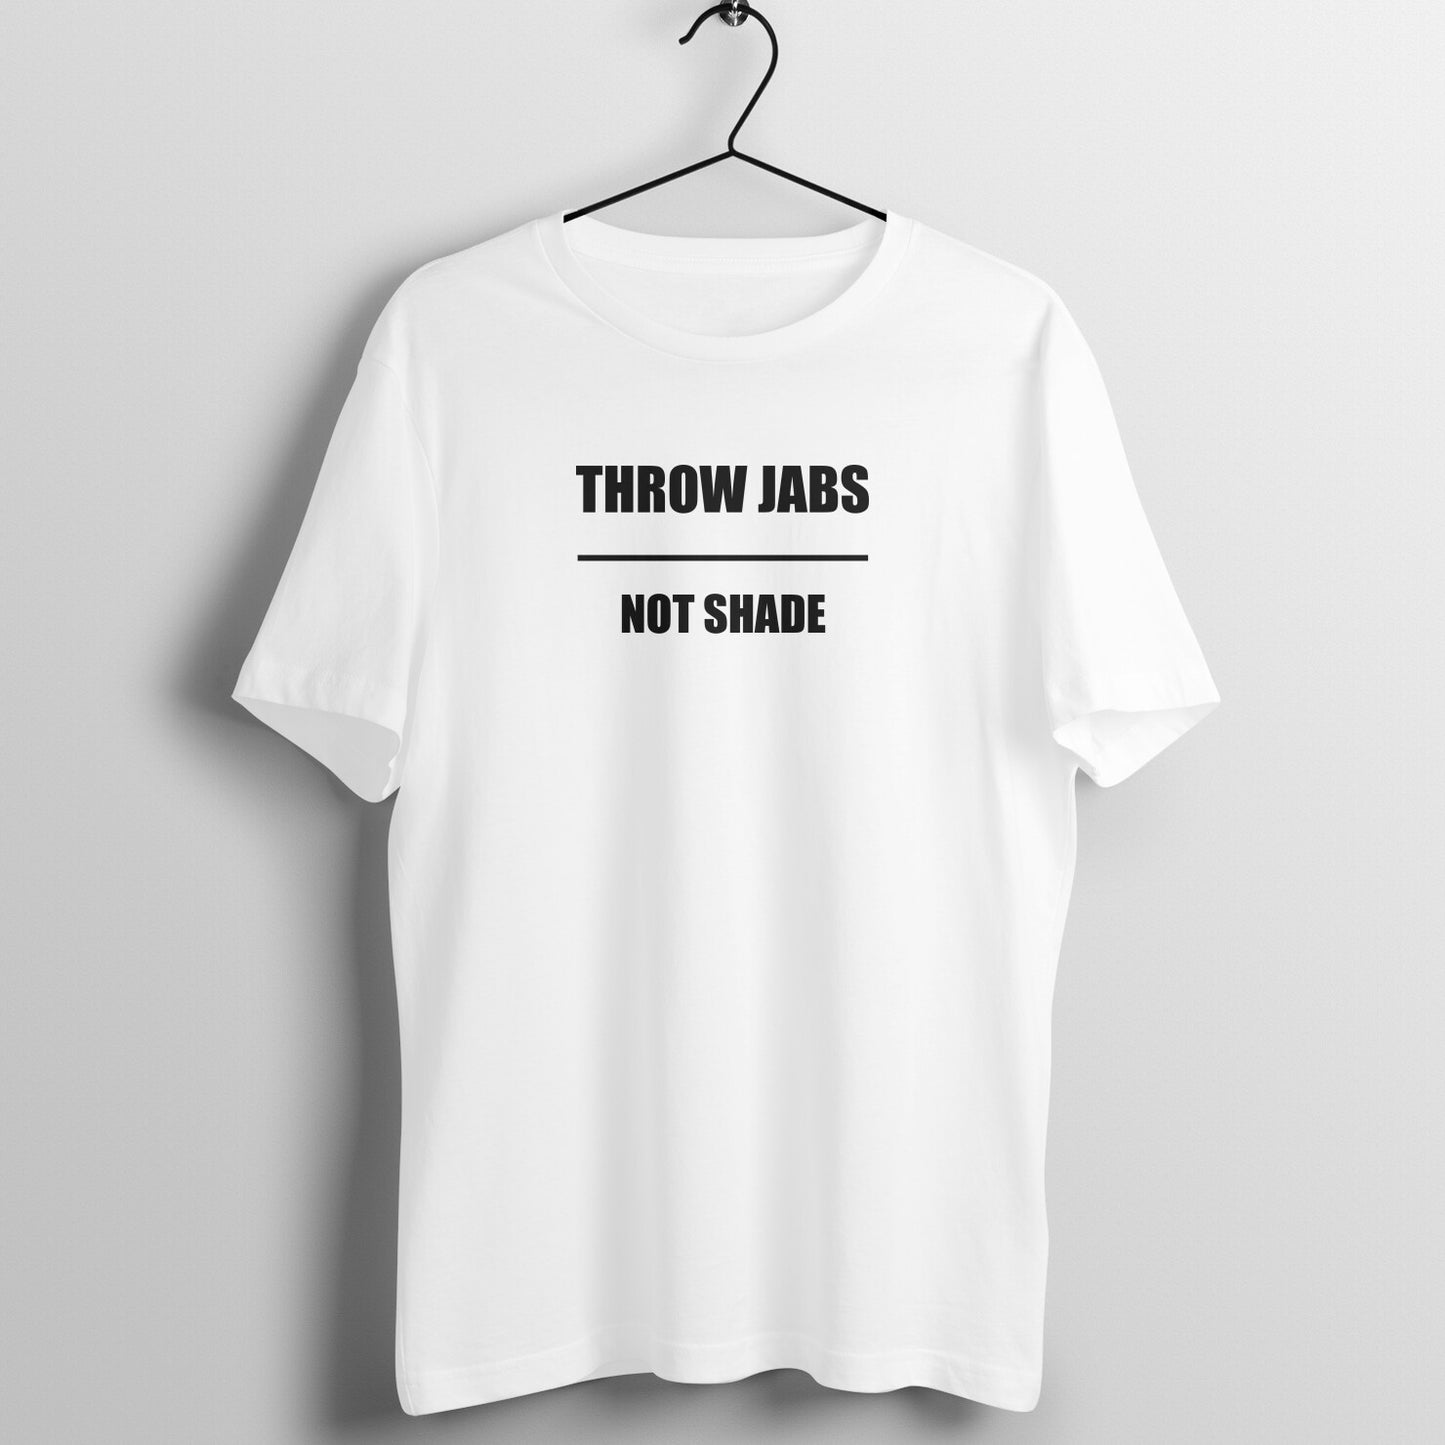 THROW JABS NOT SHADE. Boxing T-shirt